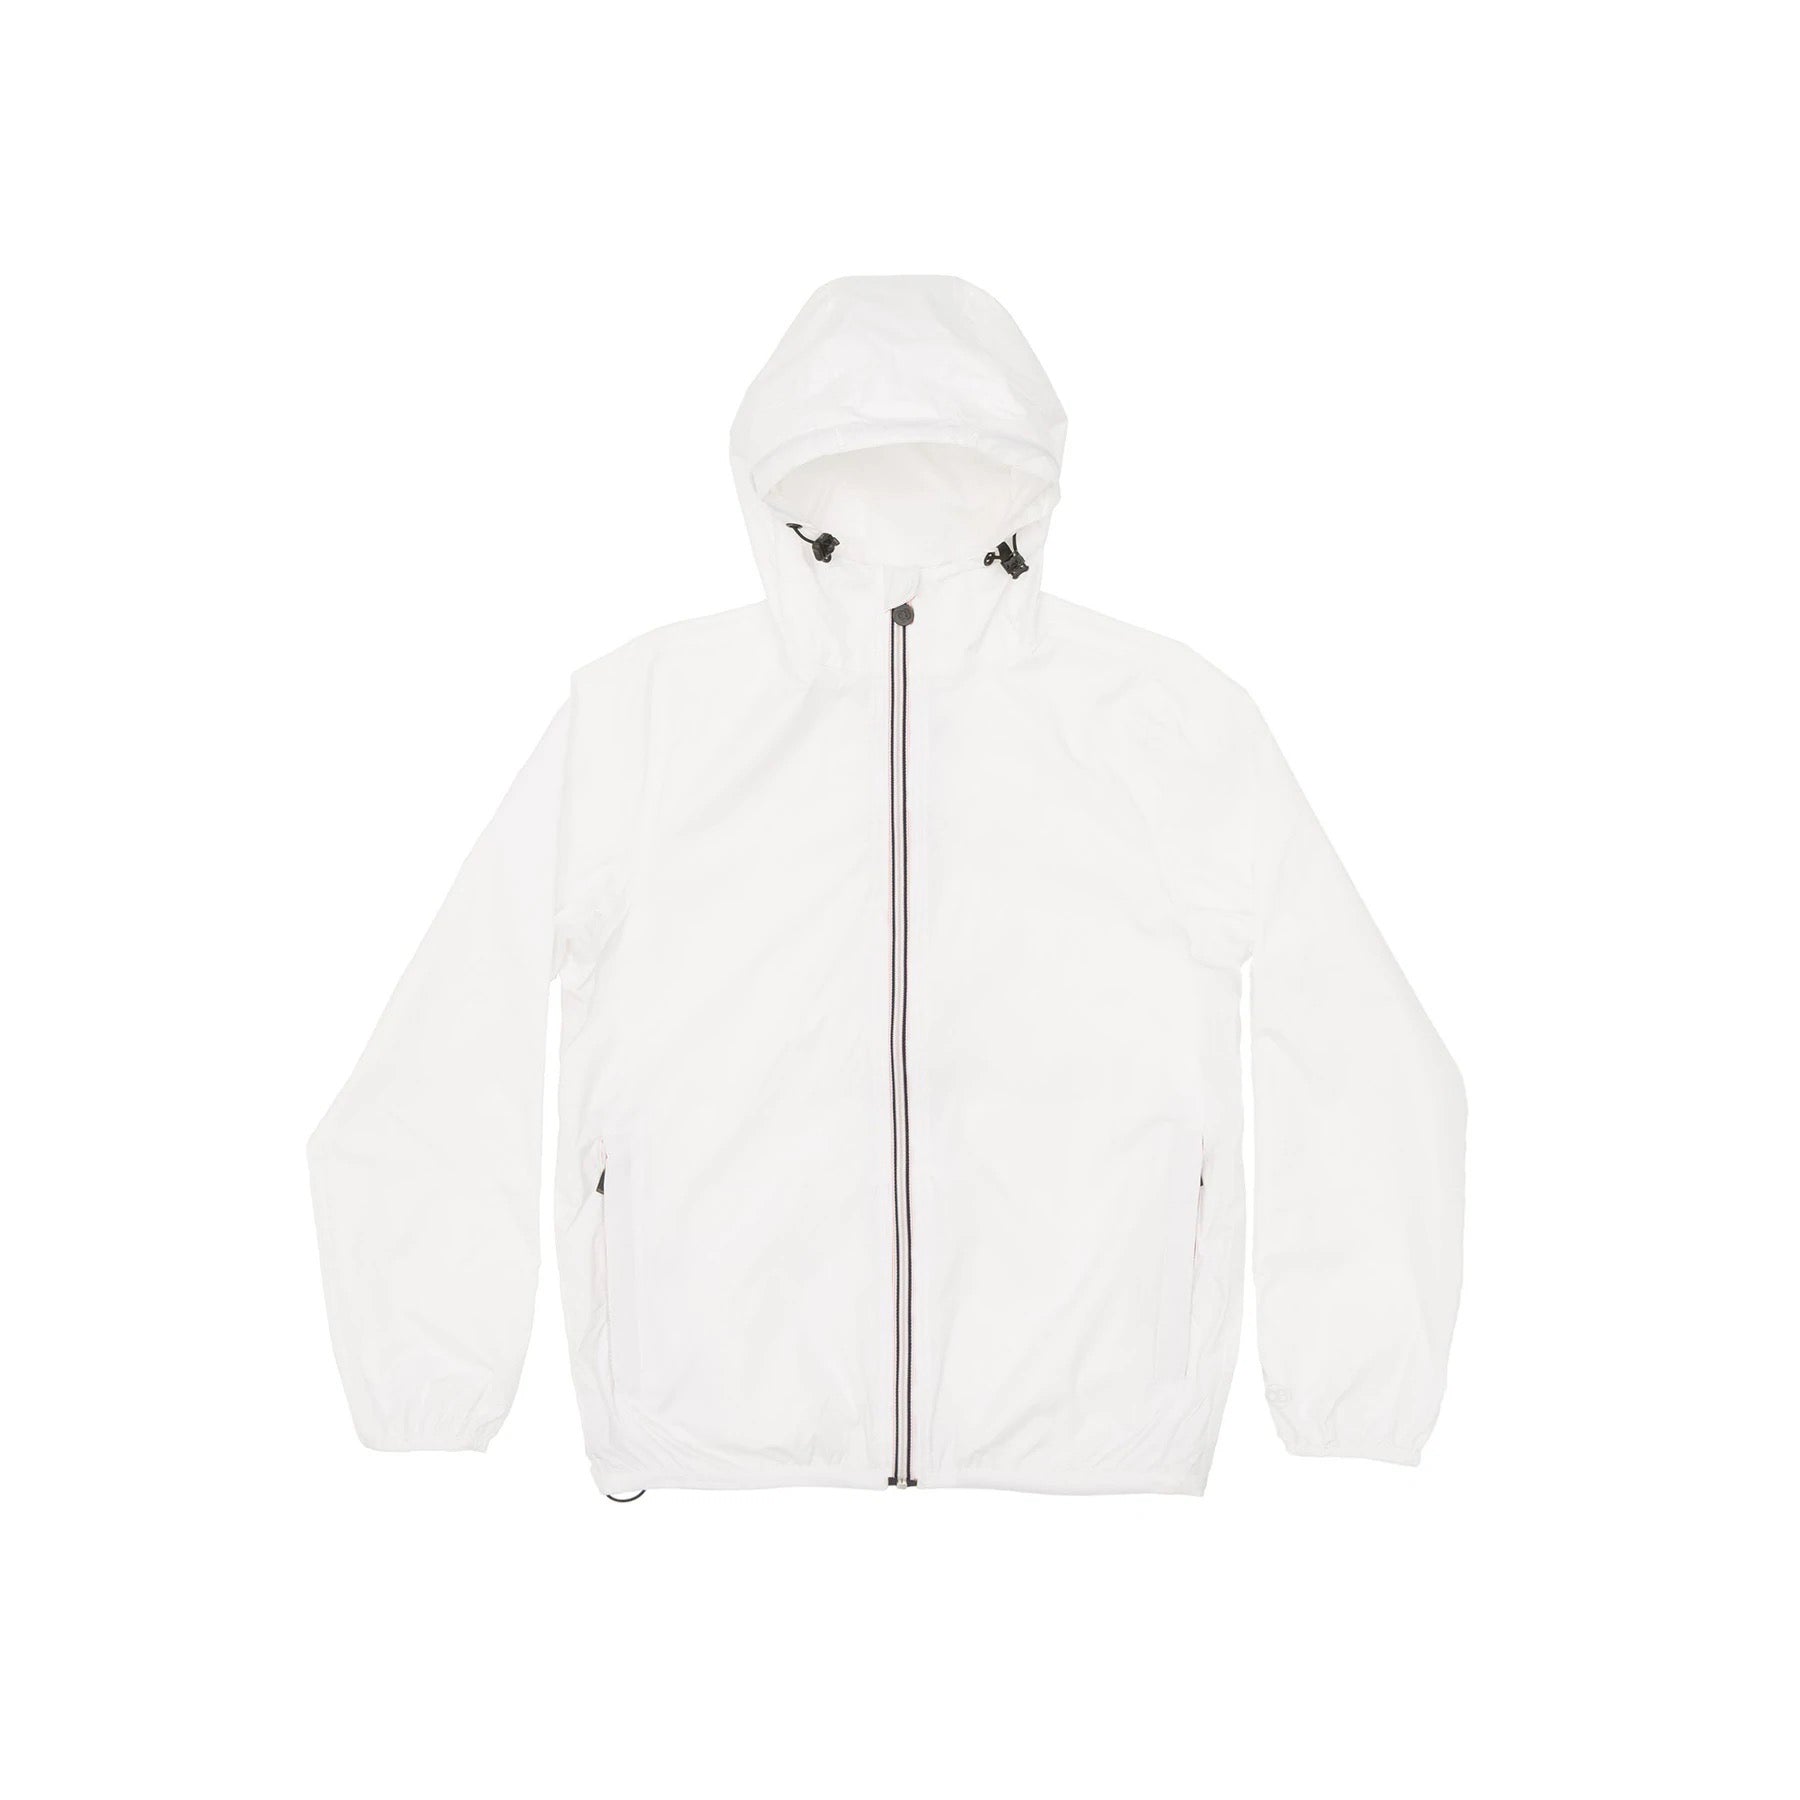 White full zip packable rain jacket and windbreaker - O8Lifestyle